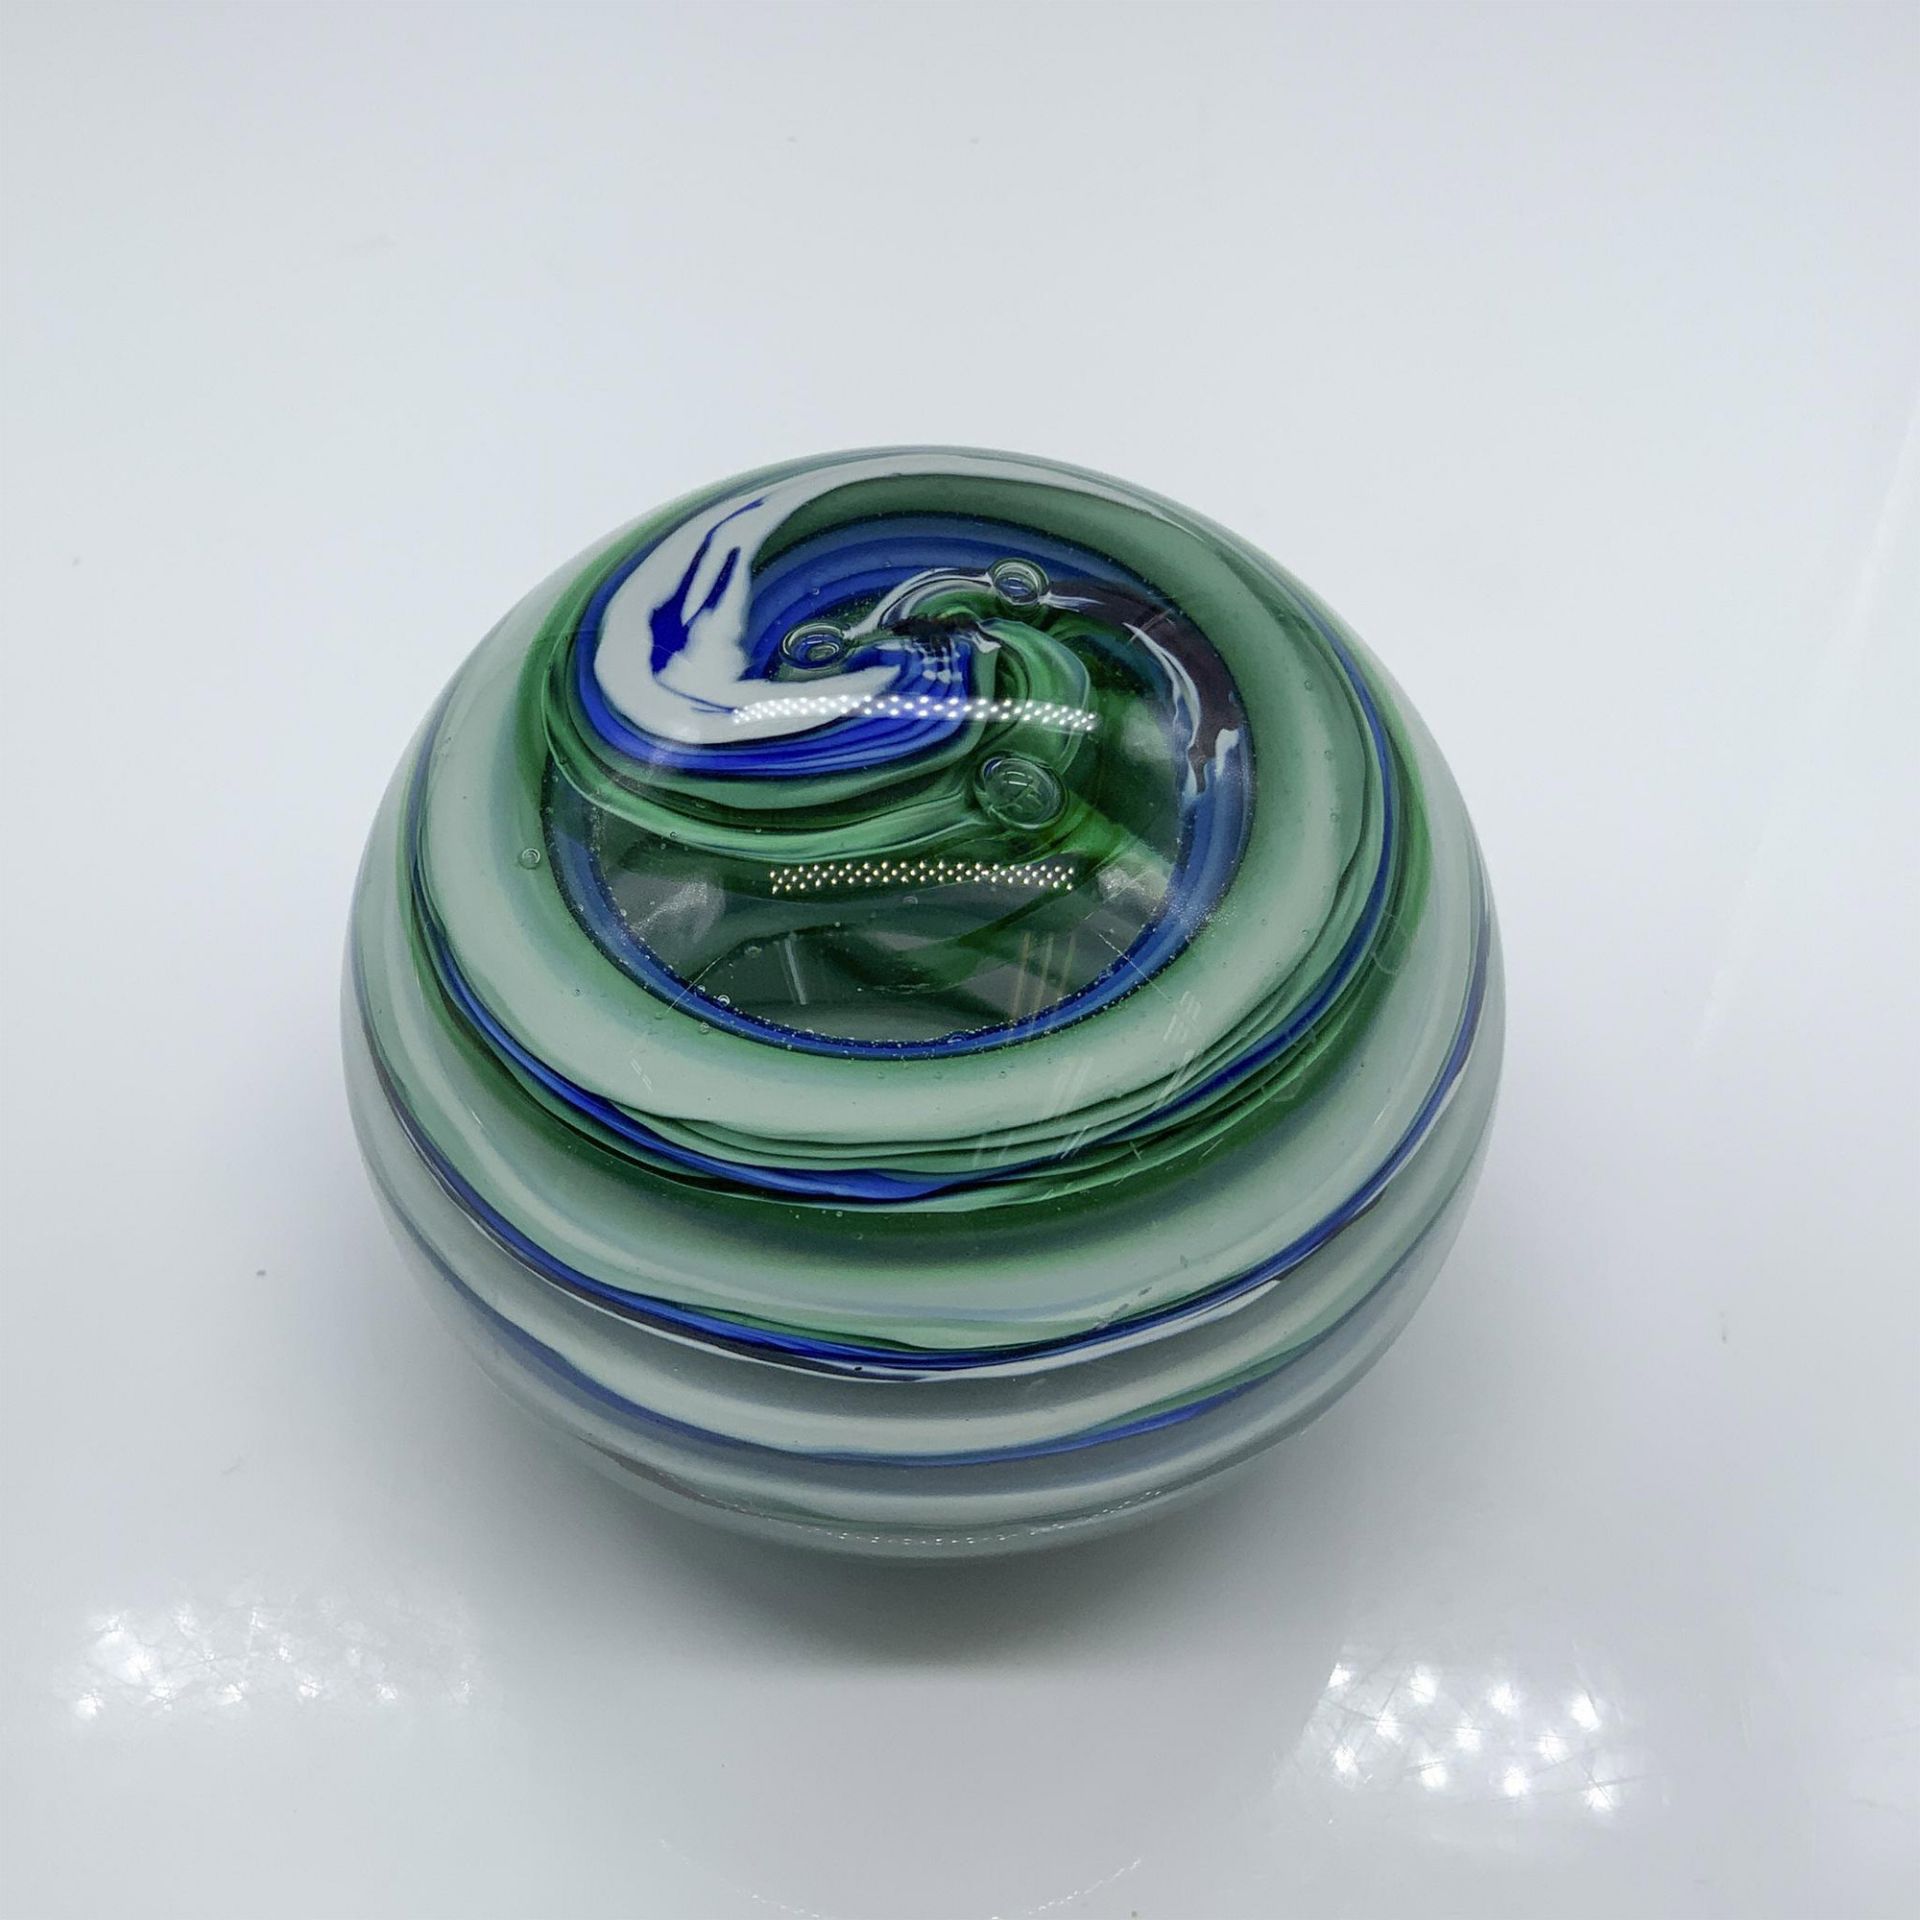 Murano Glass Blue & Green Swirl Paperweight, Signed - Image 3 of 4